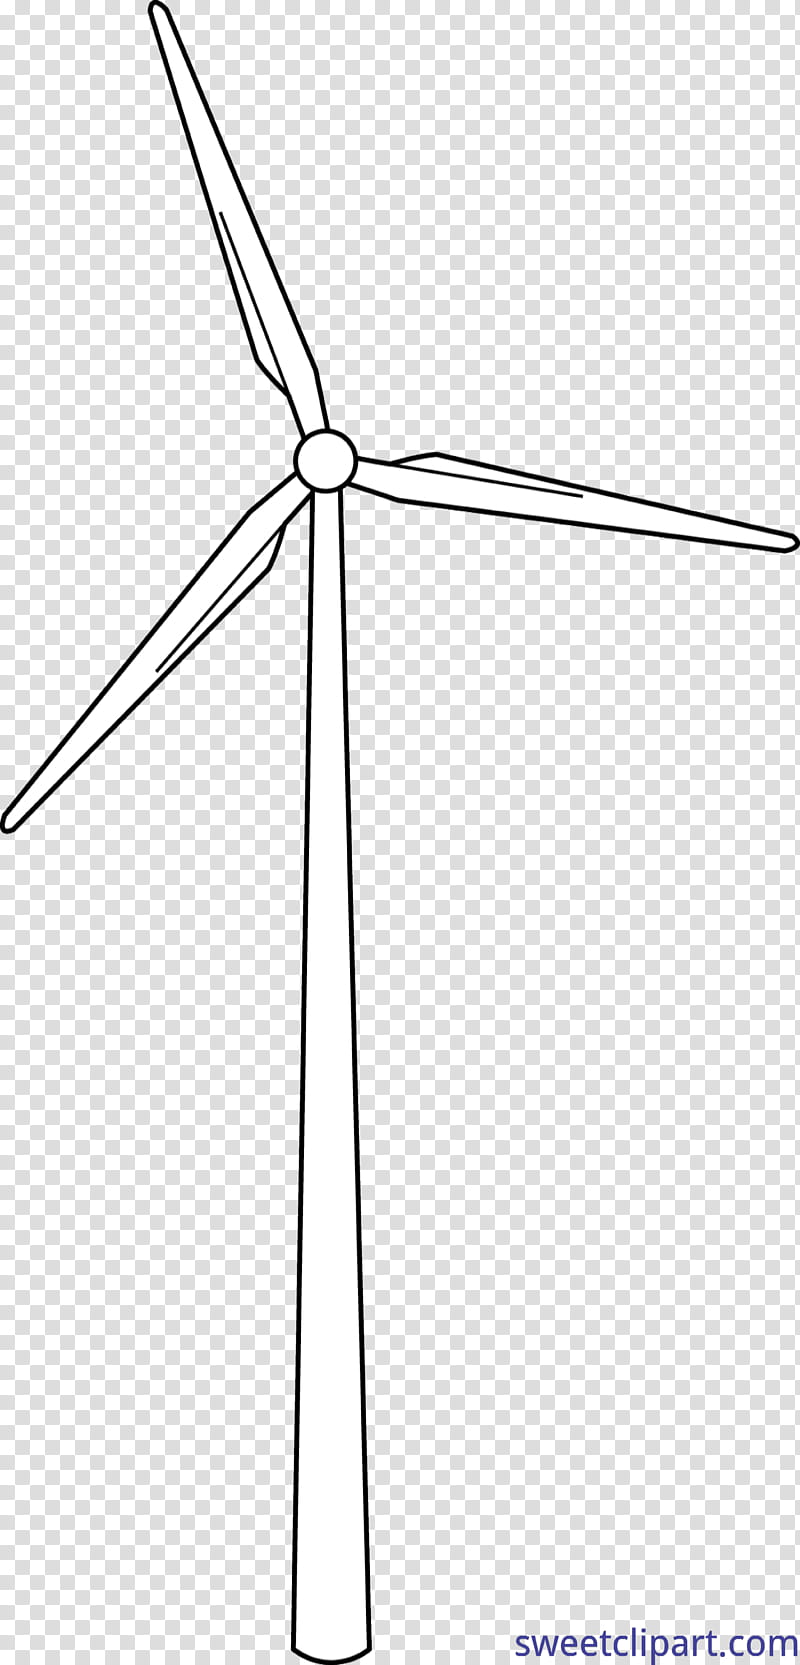 wind turbine clipart black and white